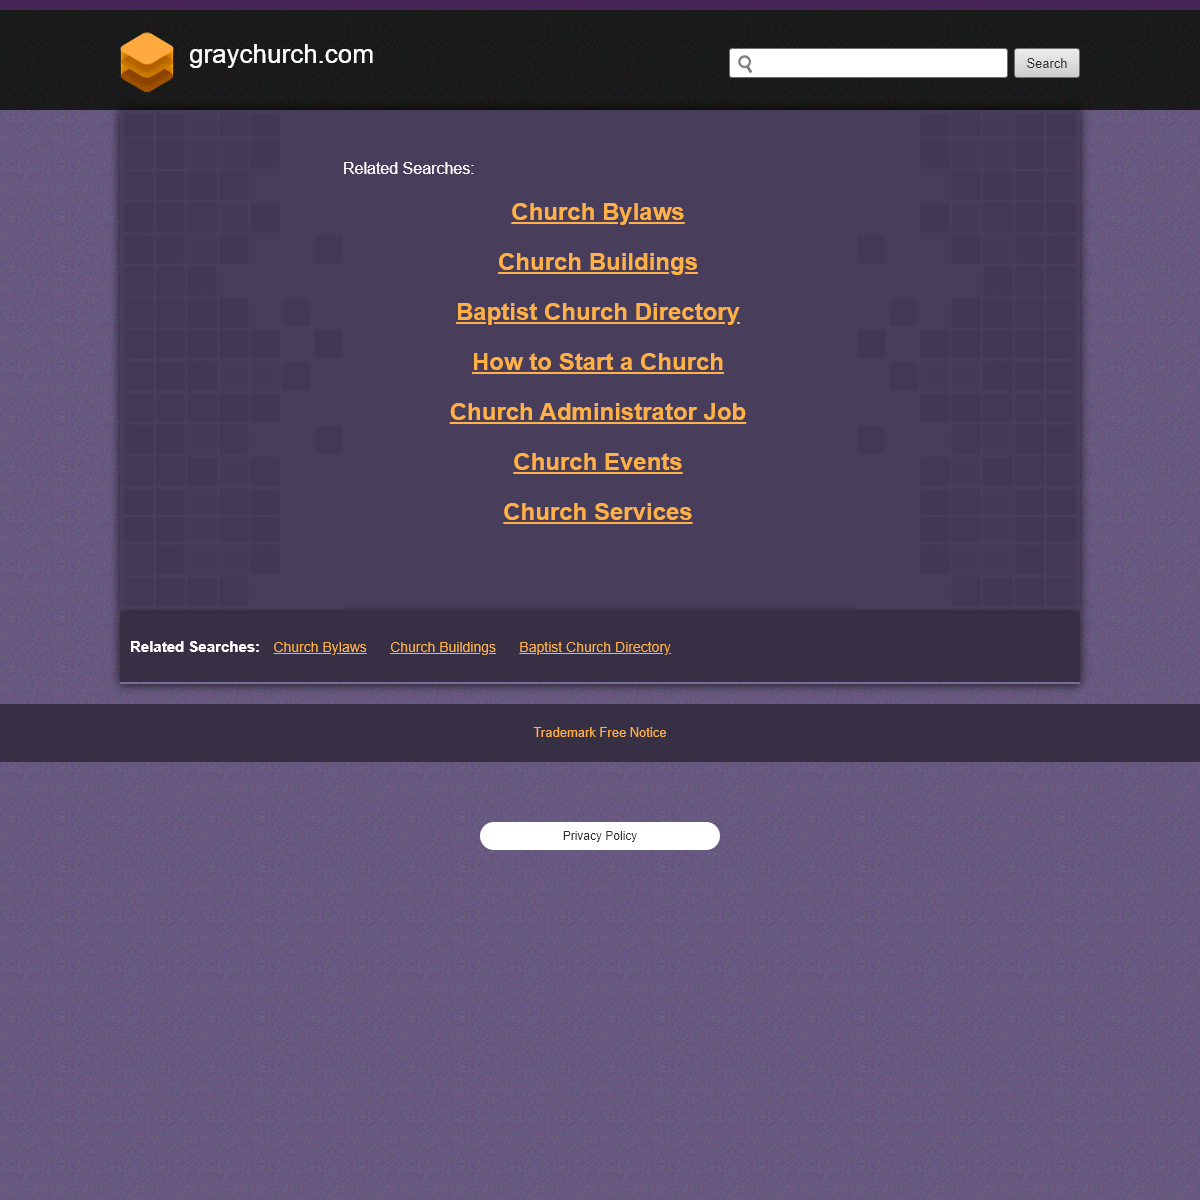 A complete backup of graychurch.com